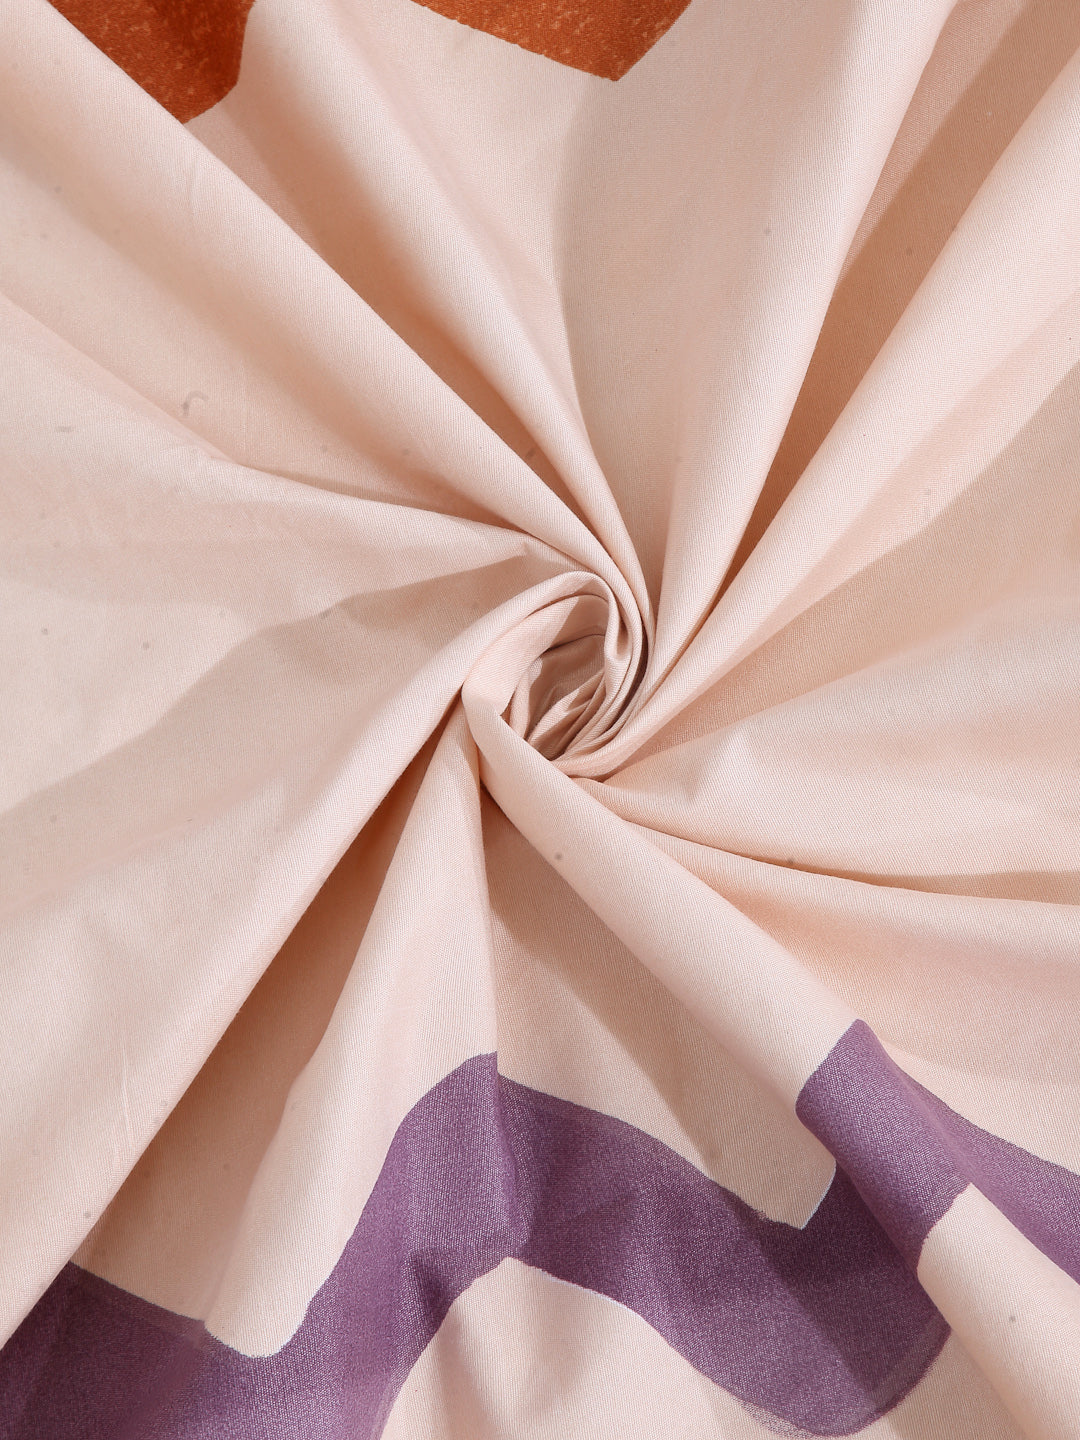 Arrabi Brown Geometric TC Cotton Blend Double Size Bedsheet with 2 Pillow Covers (250 x 215 cm)